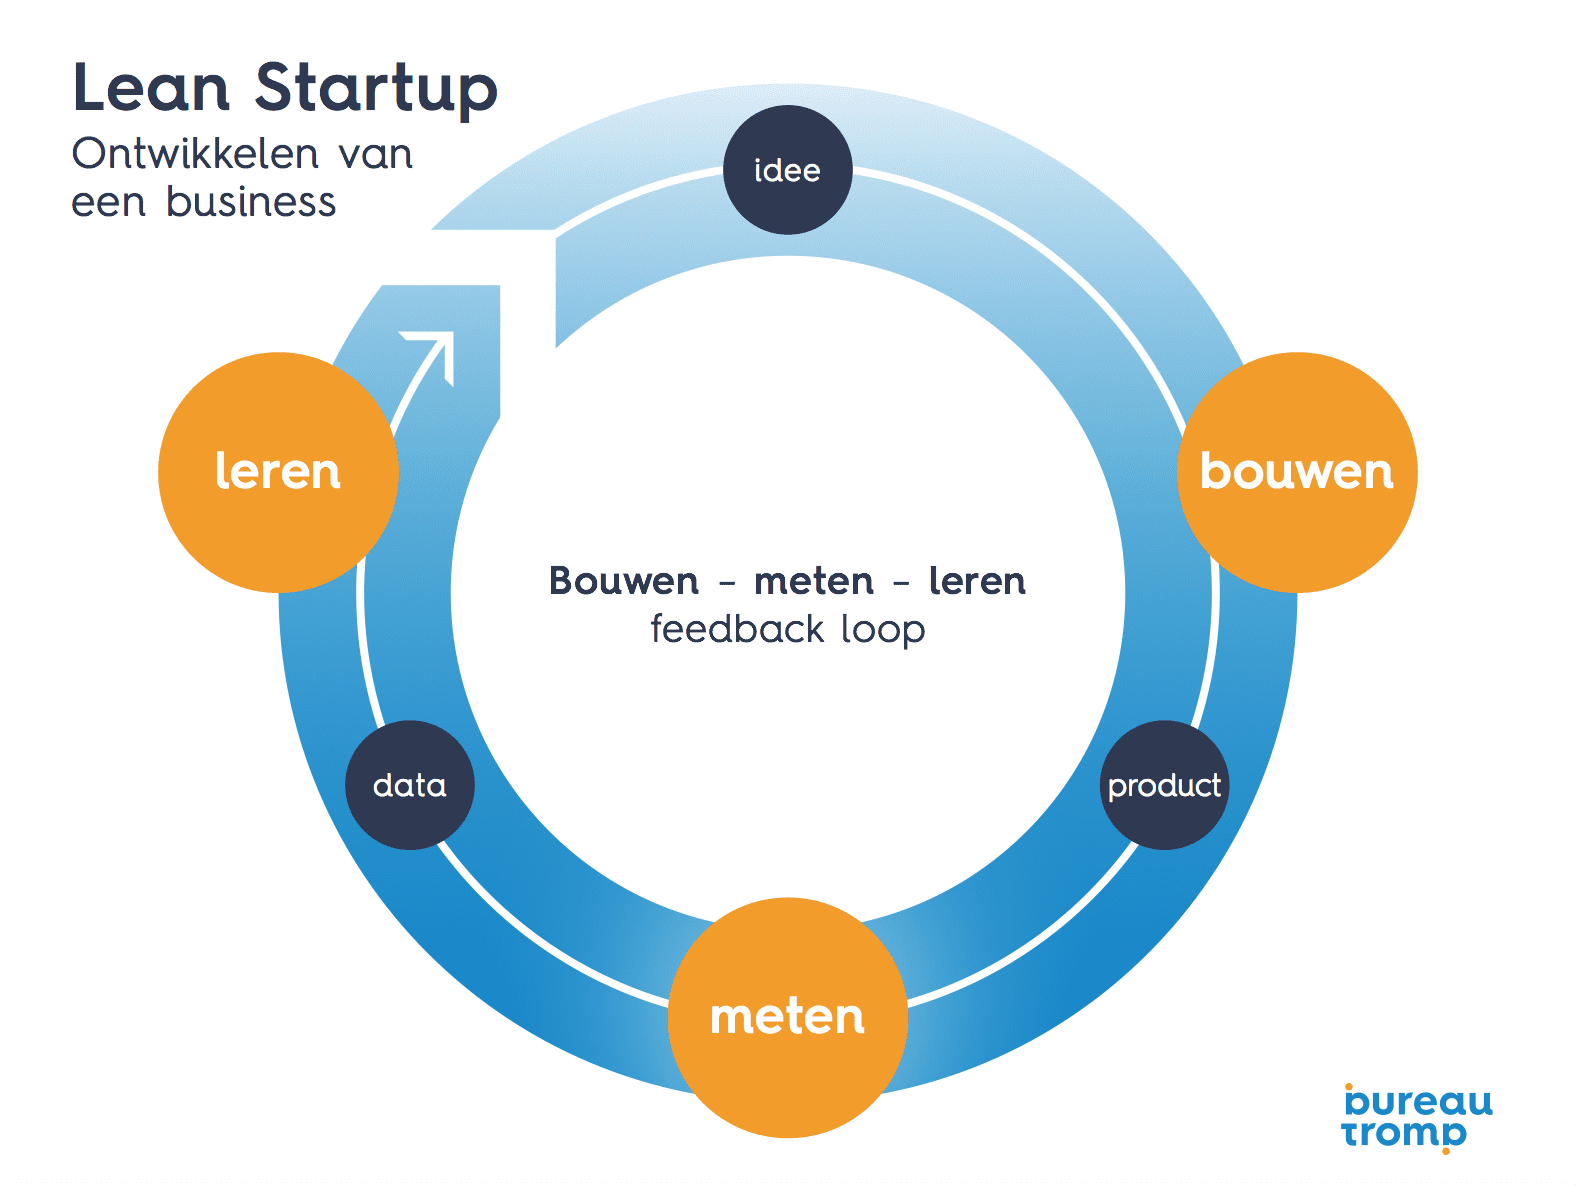 Lean startup model